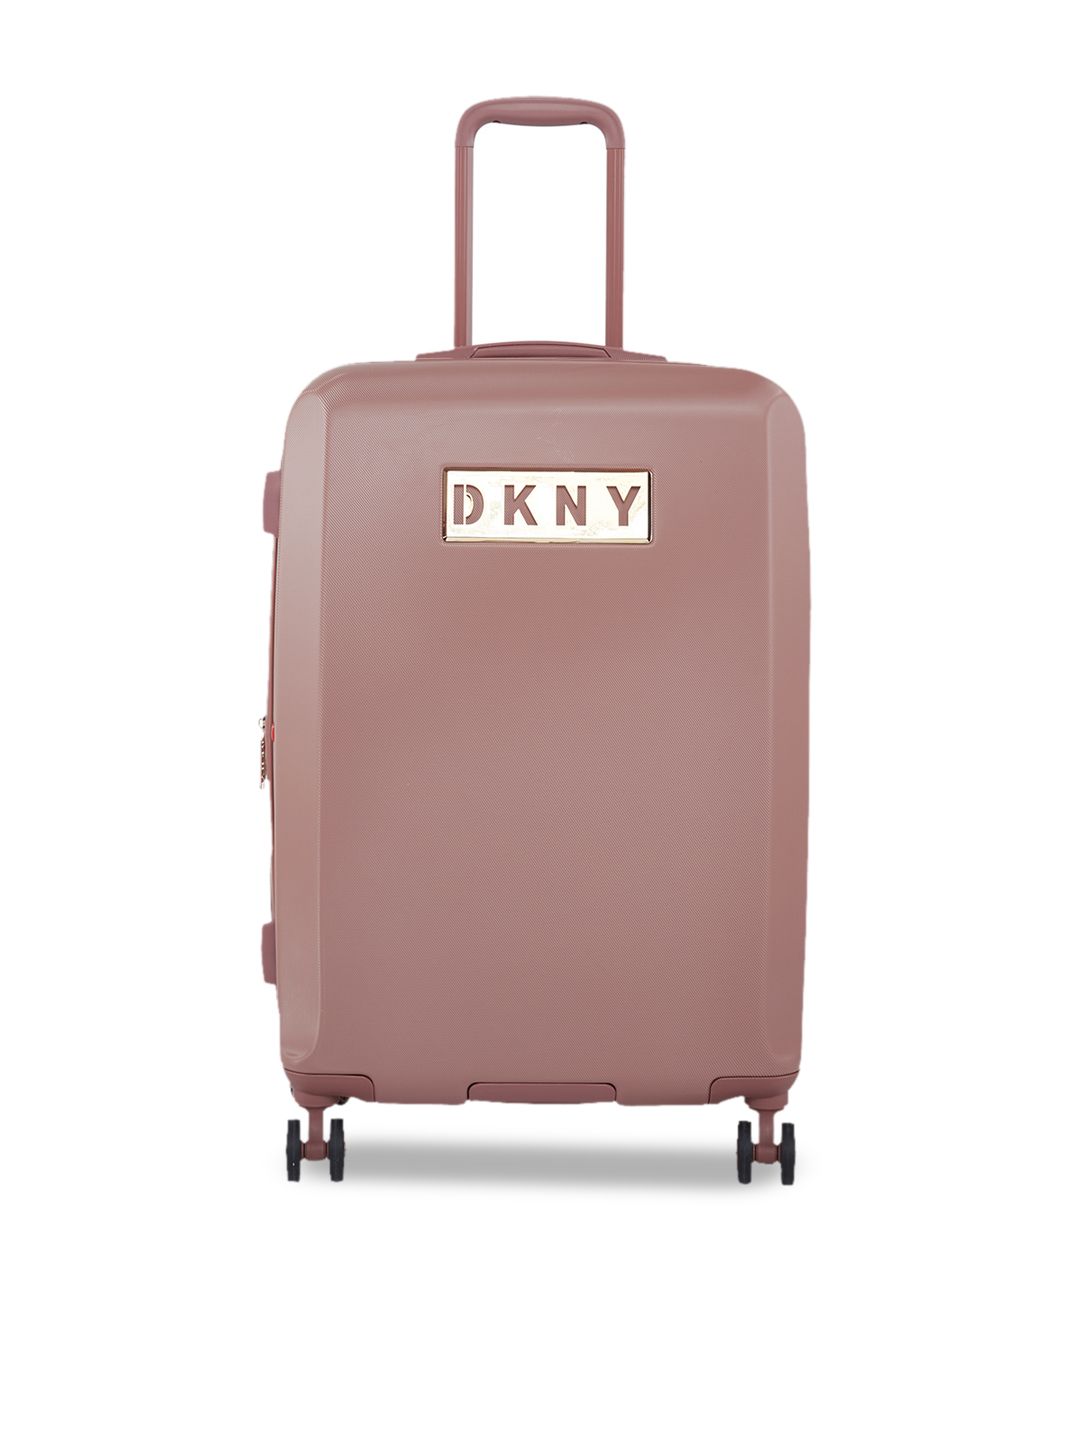 DKNY Alchemy Range Prim Rose Hard Medium Suitcase Price in India